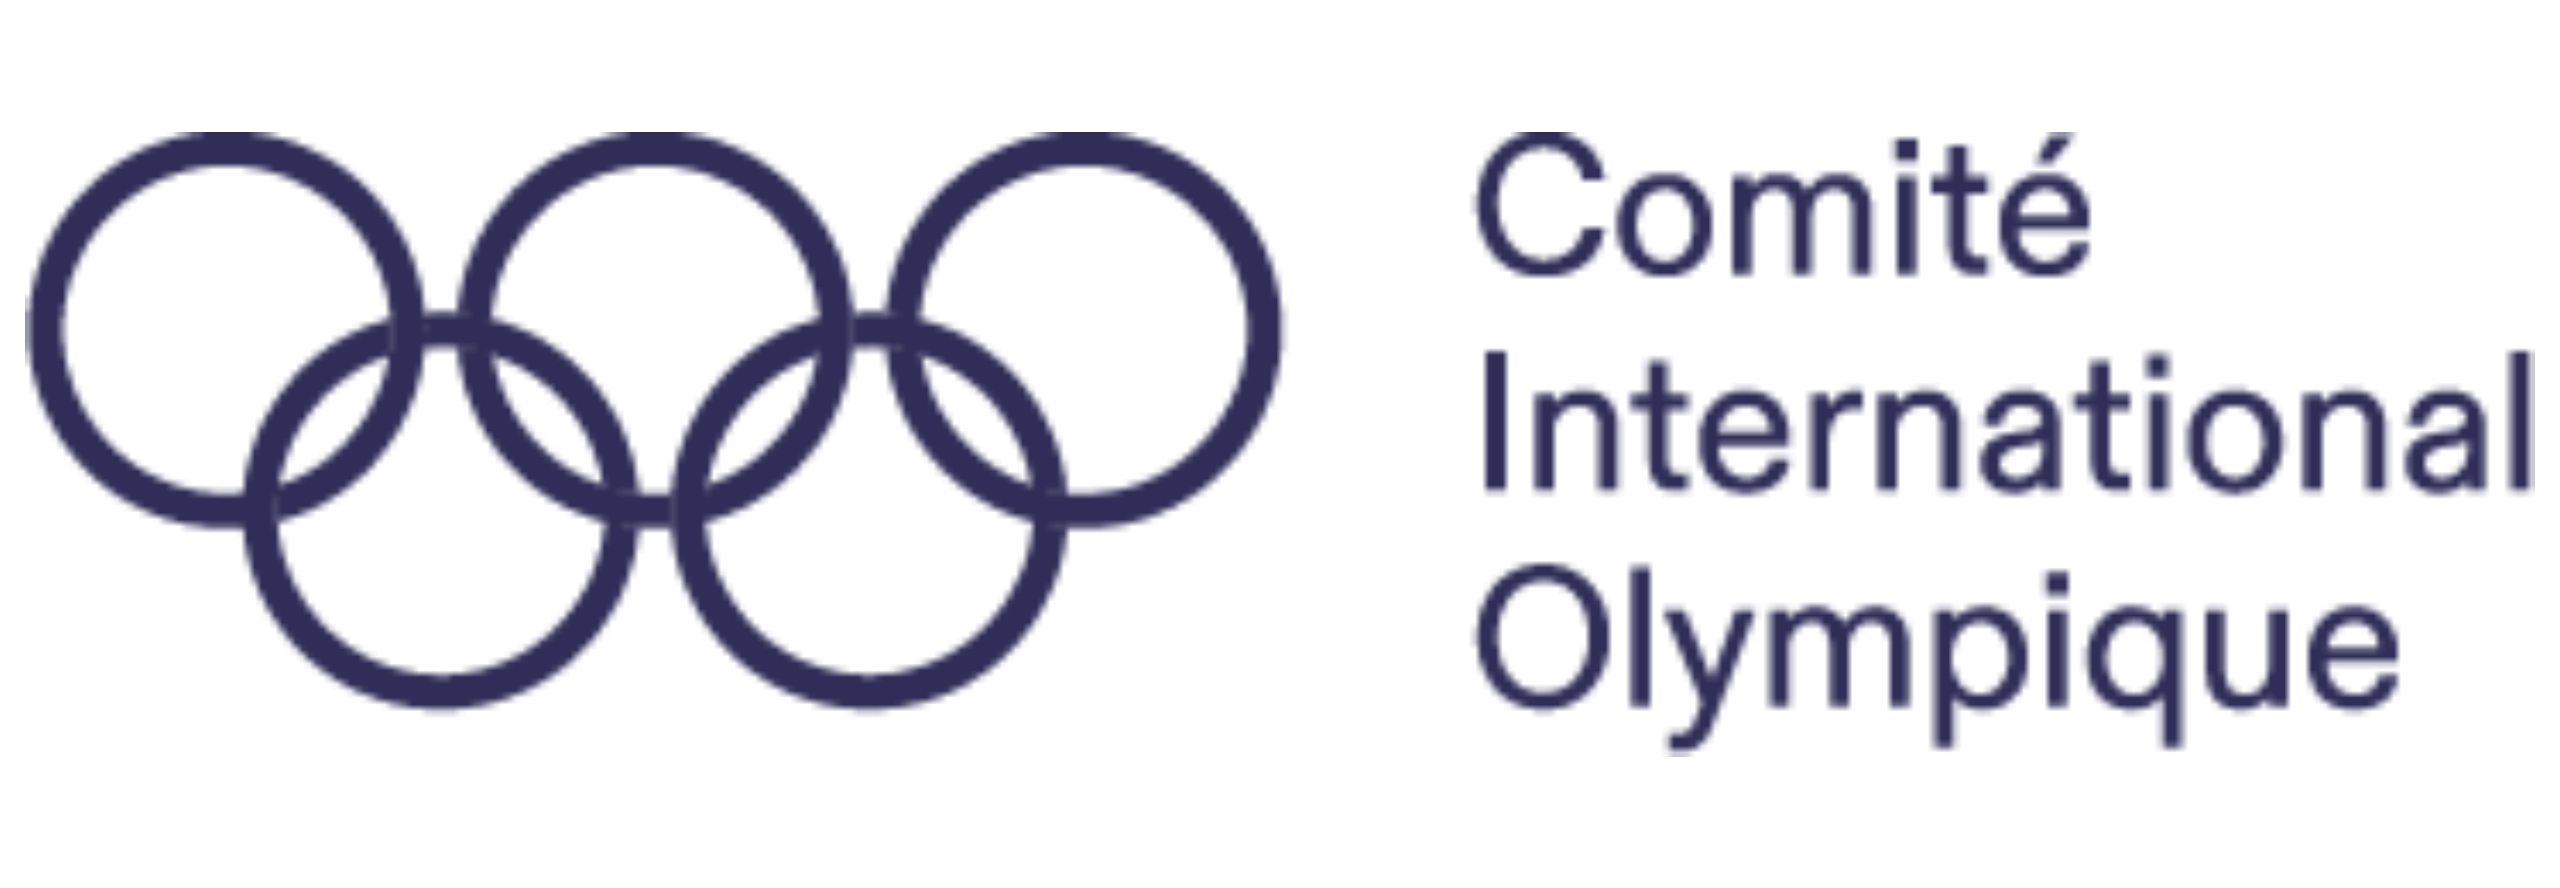 Comité International Olympique logo - Tryane Analytics for internal communications